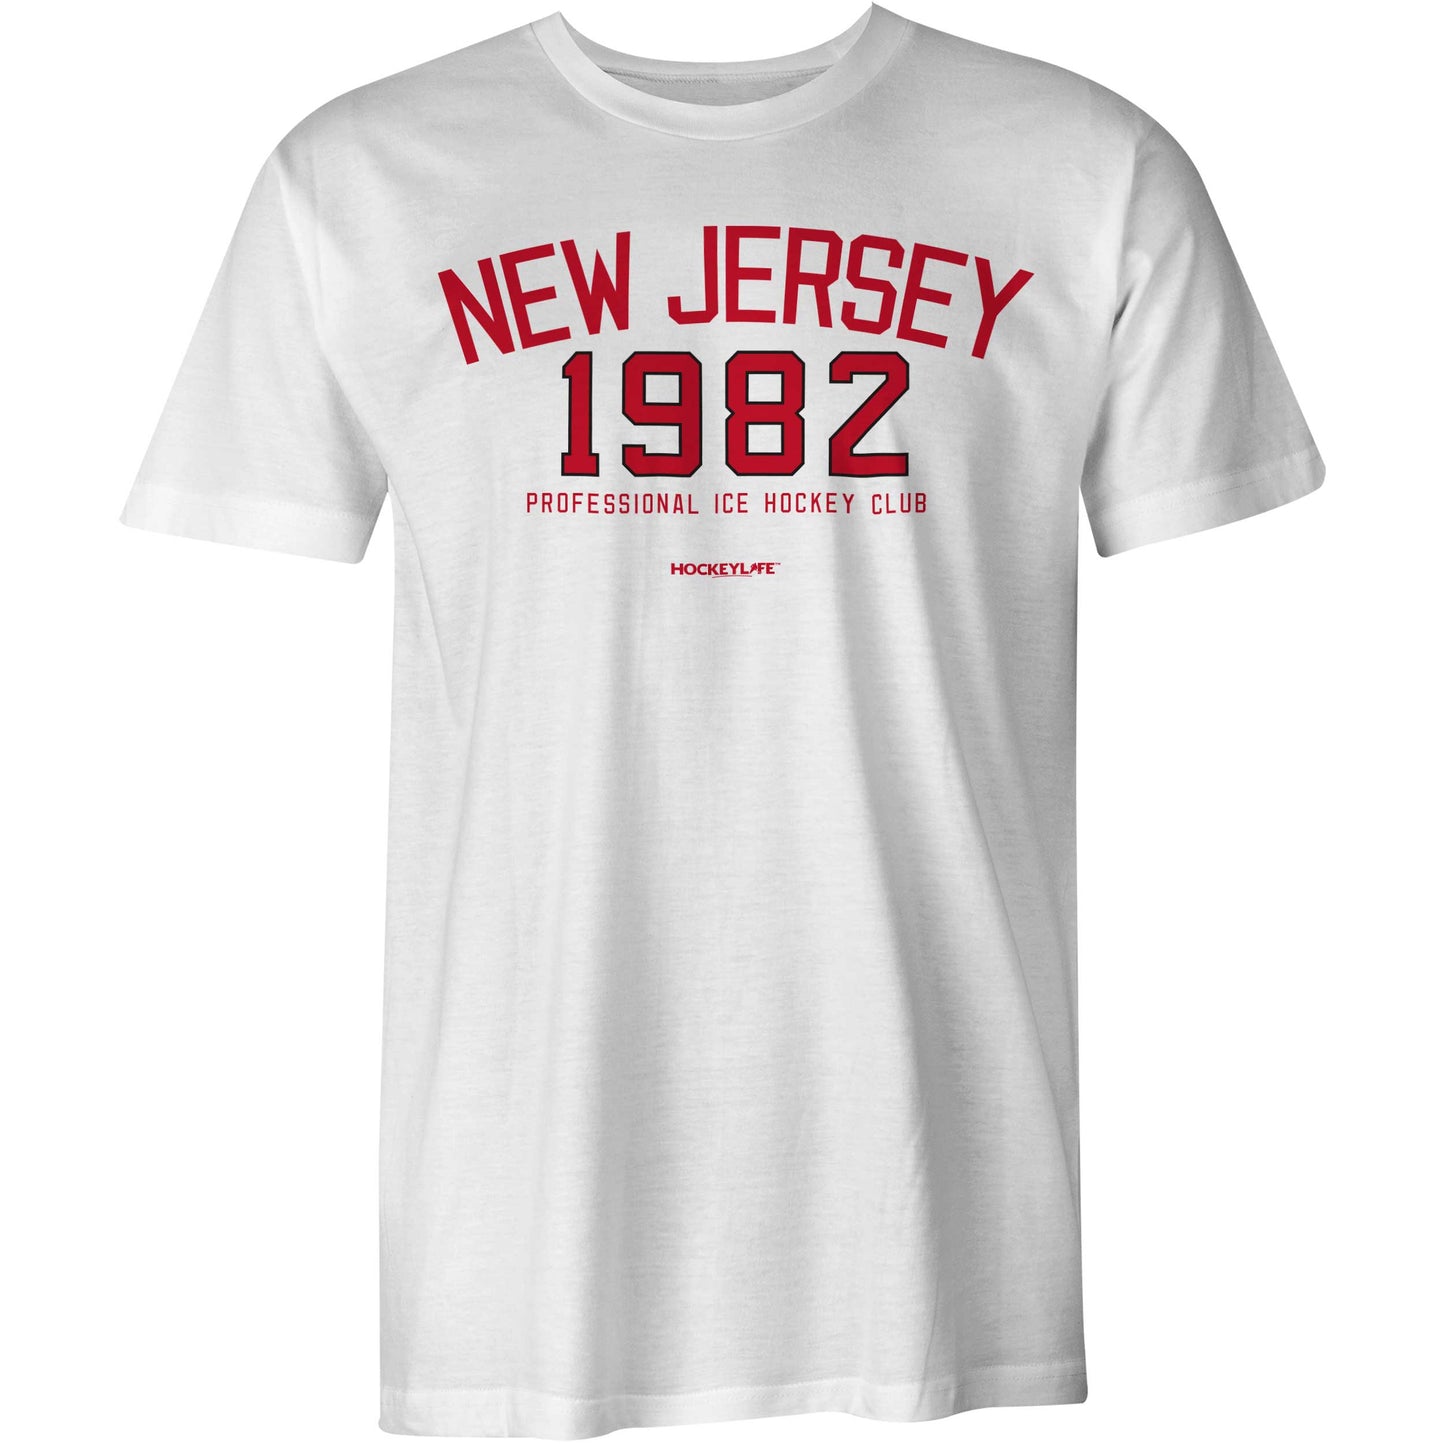 New Jersey Professional Hockey Club Tee Shirt (White)